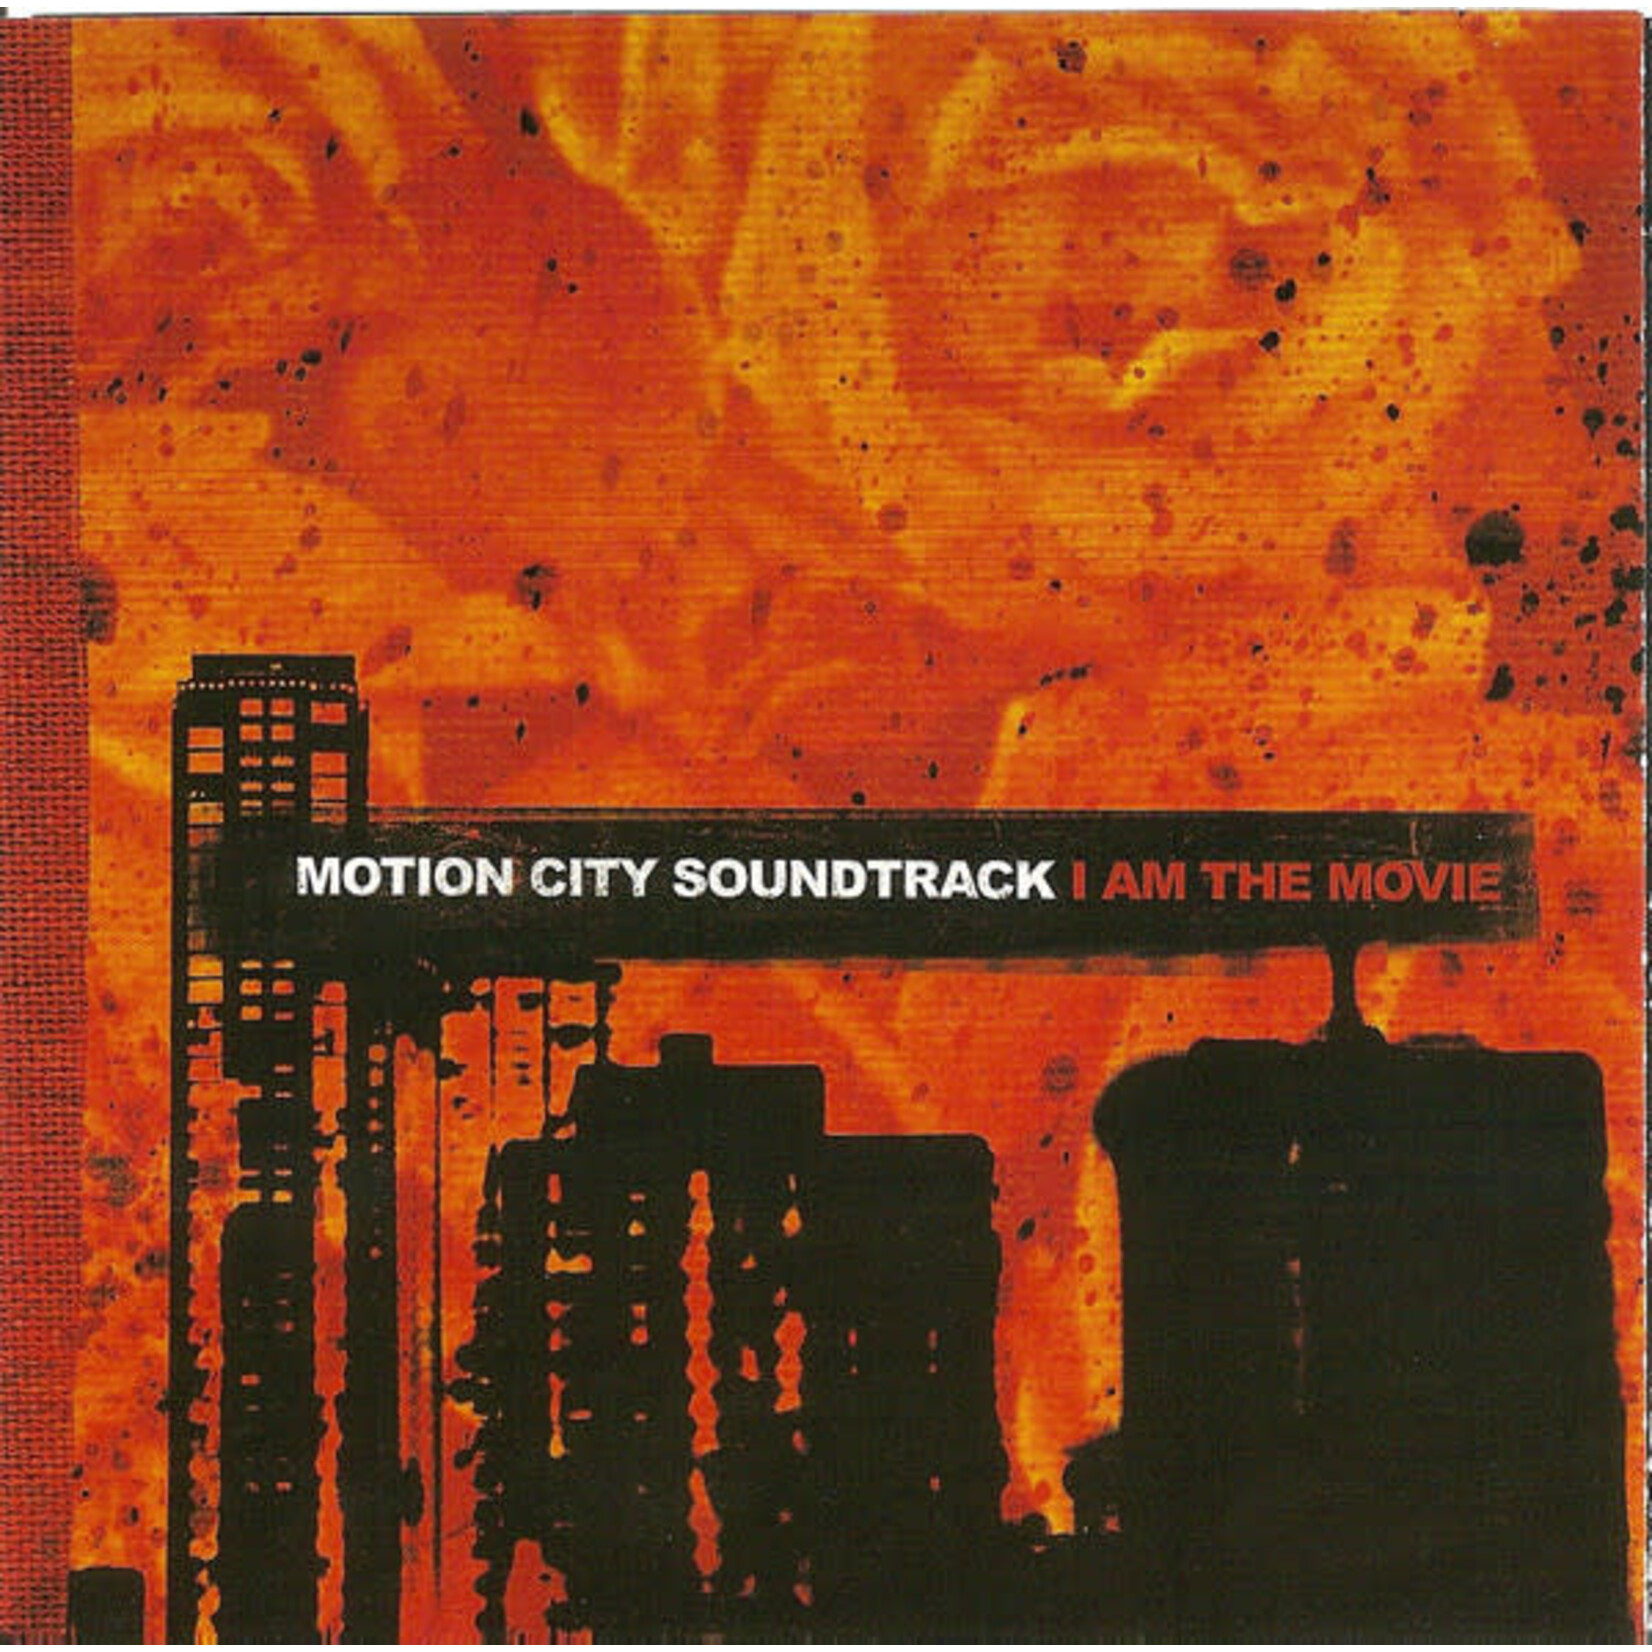 [New] Motion City Soundtrack - I Am the Movie (20th Anniversary Edition, tangerine splatter)